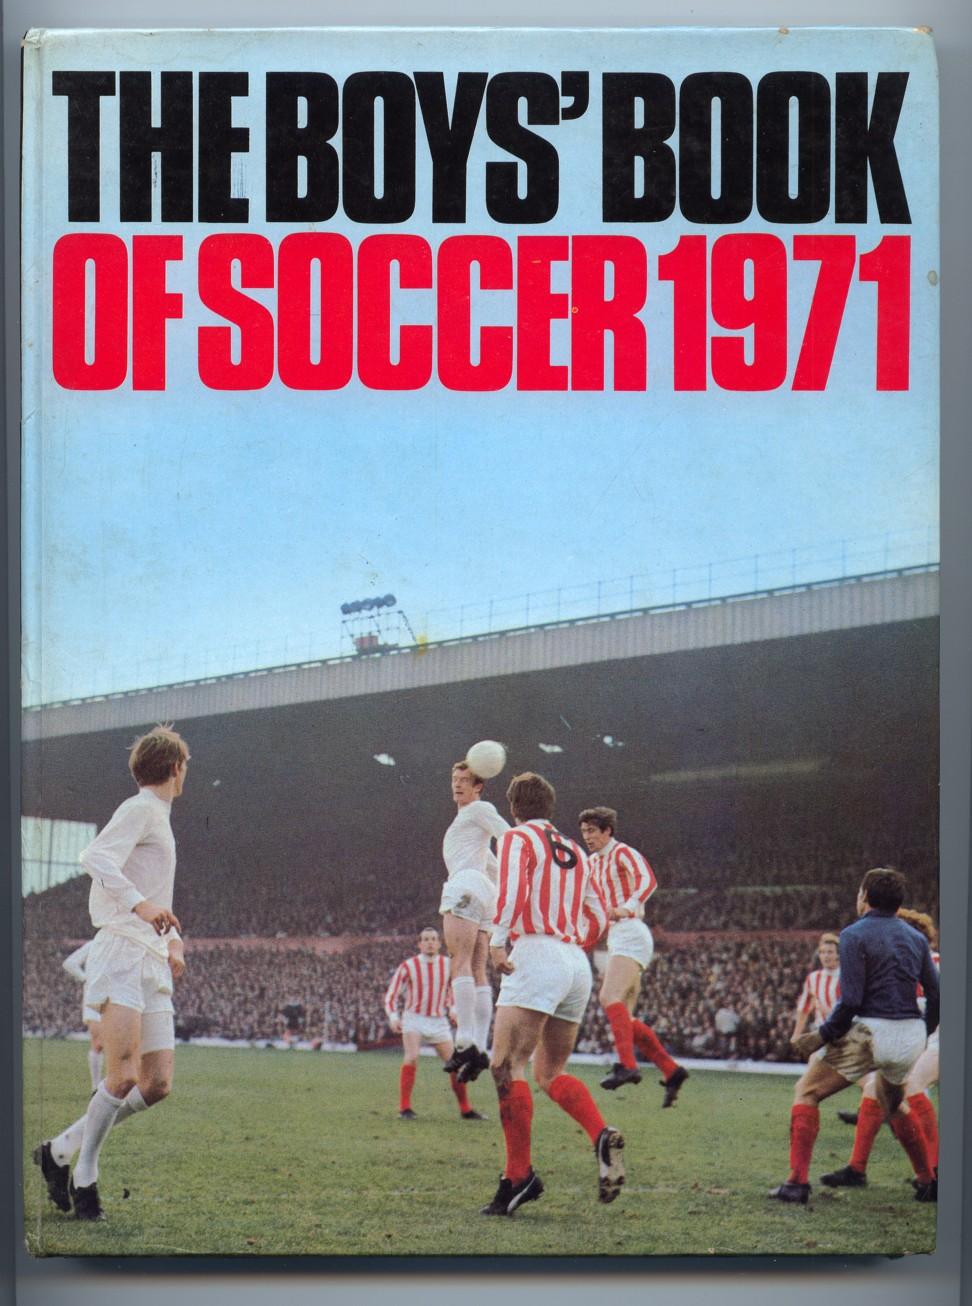 Boys' Book of Soccer